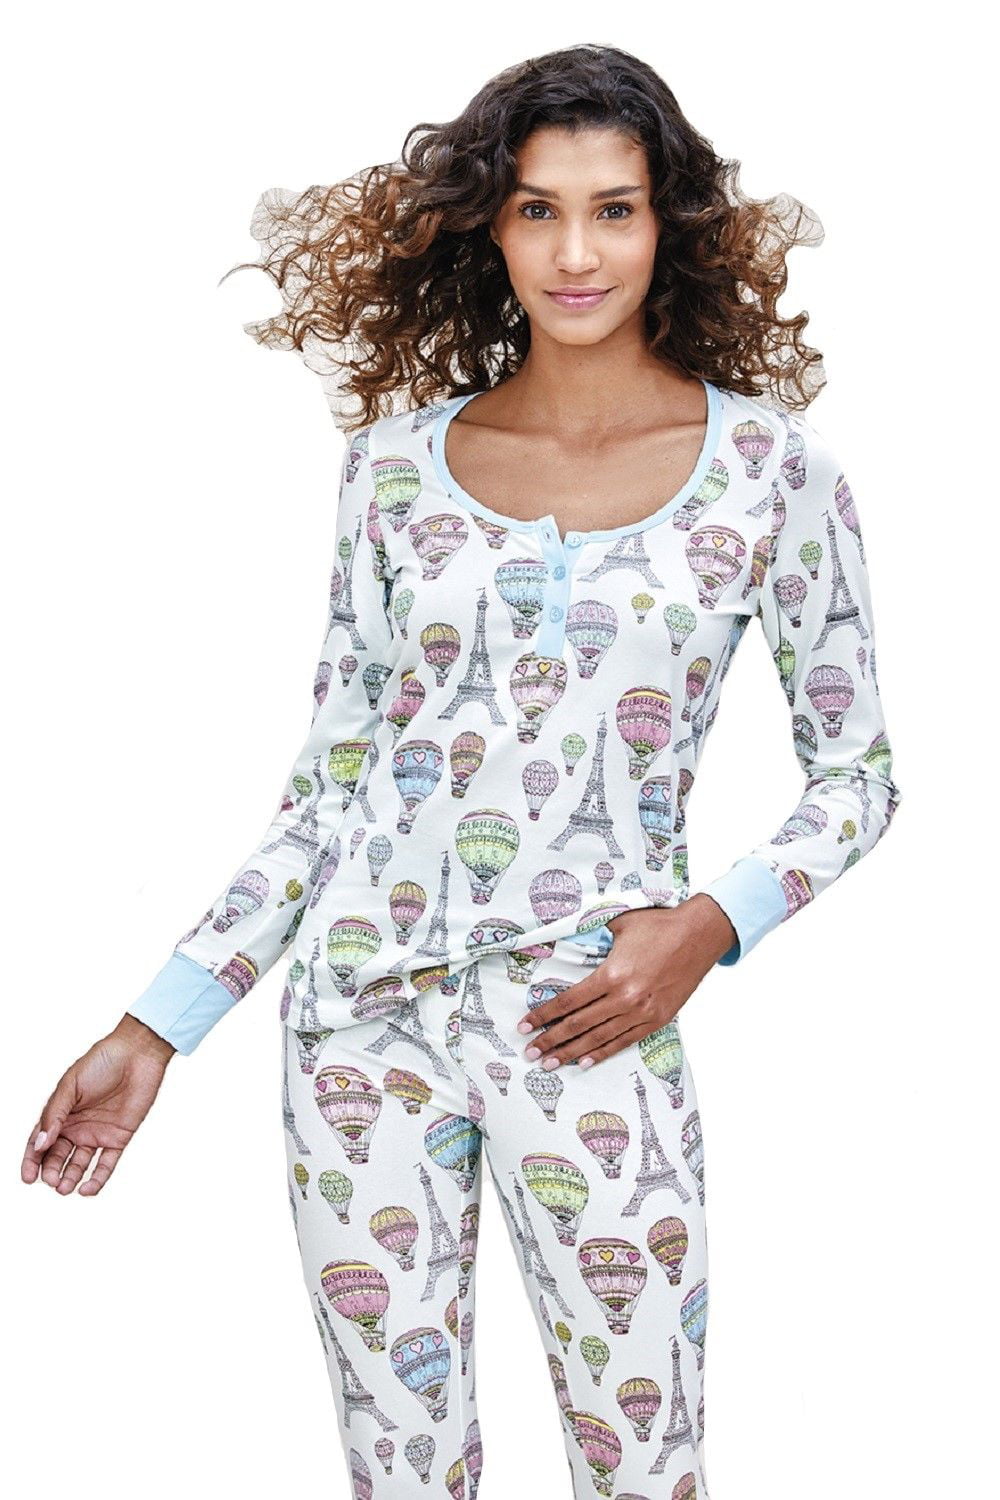 Sleepyheads Women’s Sleepwear Long Sleeve Striped Knit Pajama Set